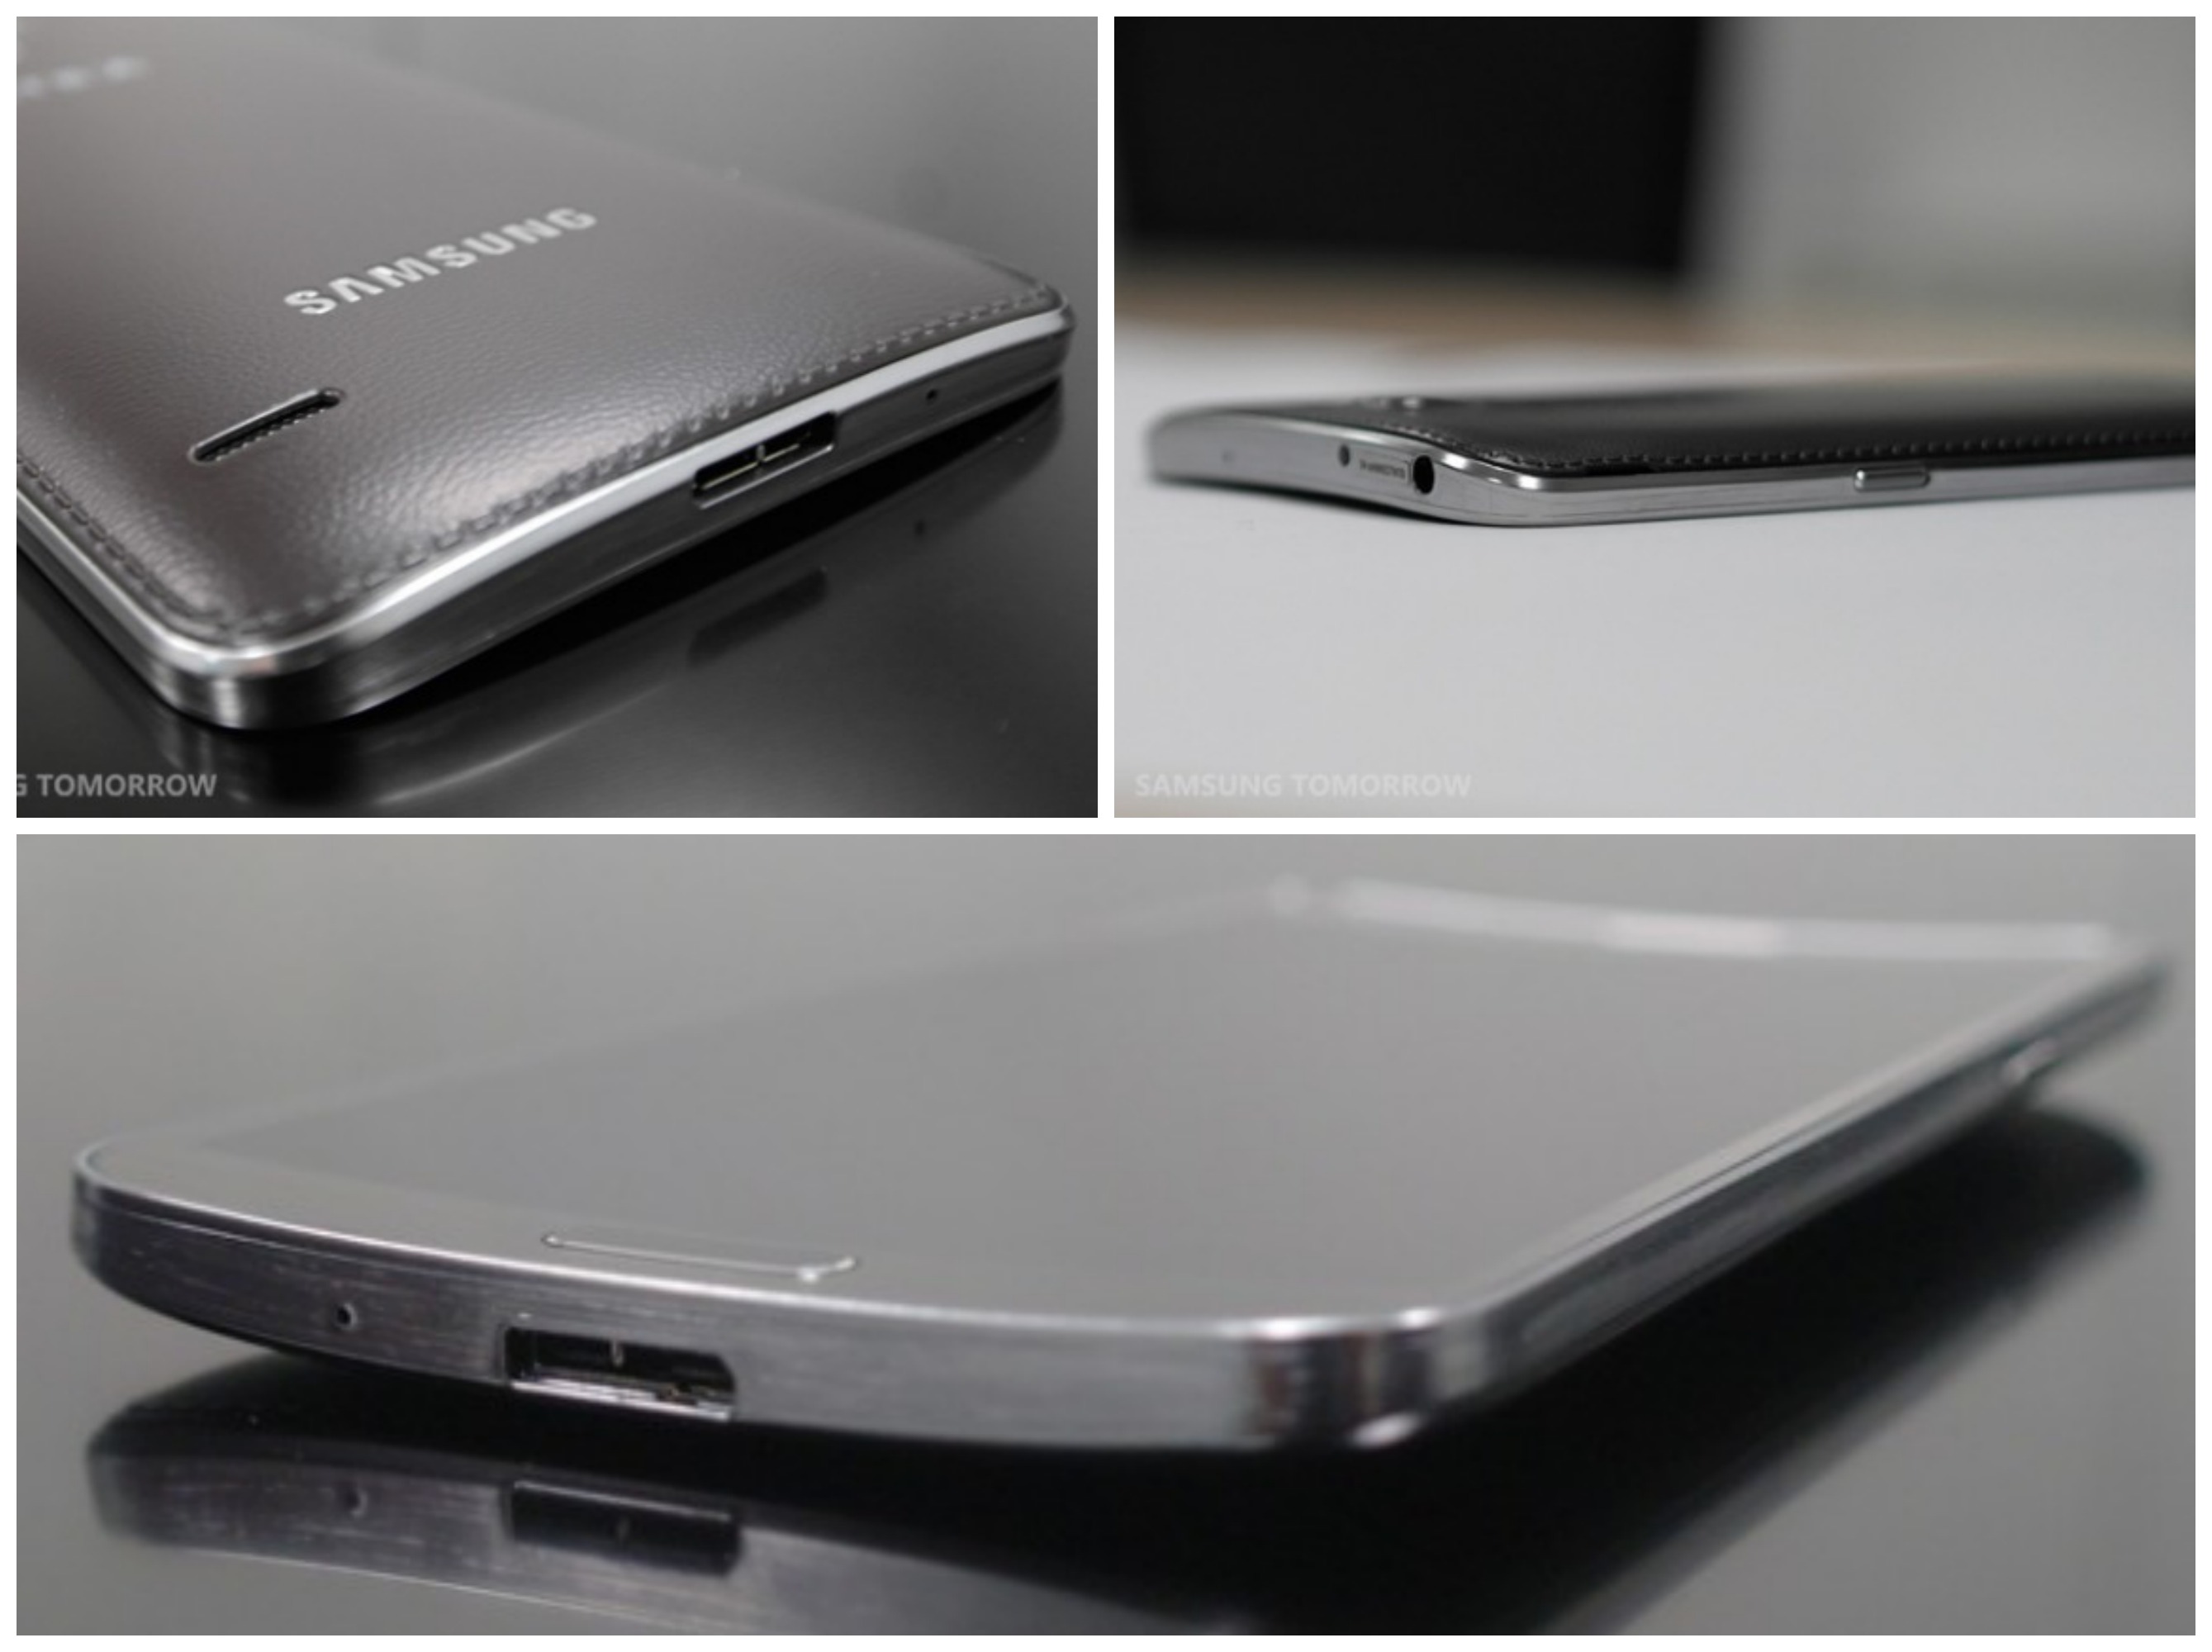 Samsung-Galaxy-Round-angles.jpg